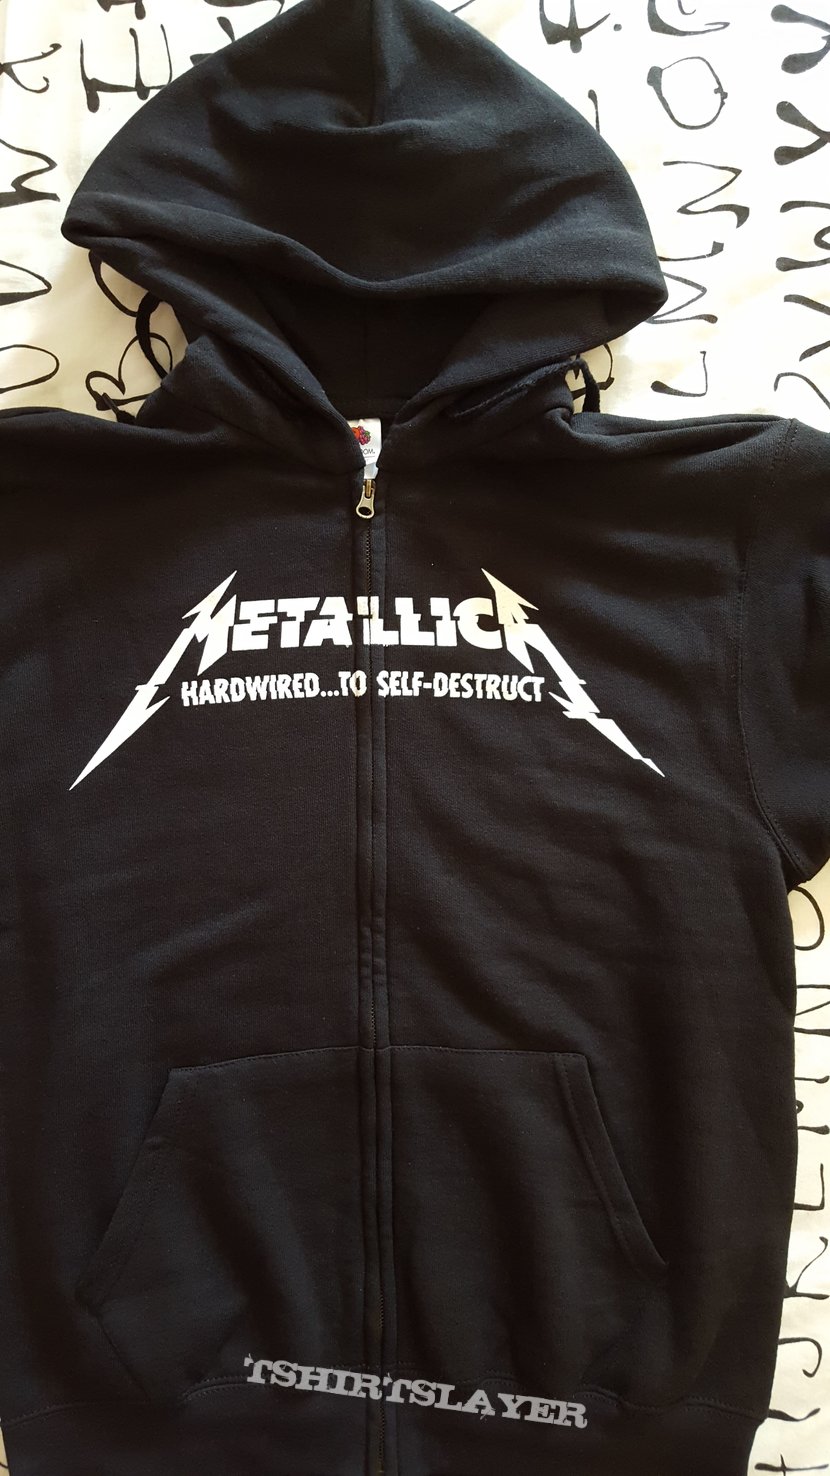 Metallica - "Hardwired...To Self Destruct" official zipper hoodie |  TShirtSlayer TShirt and BattleJacket Gallery